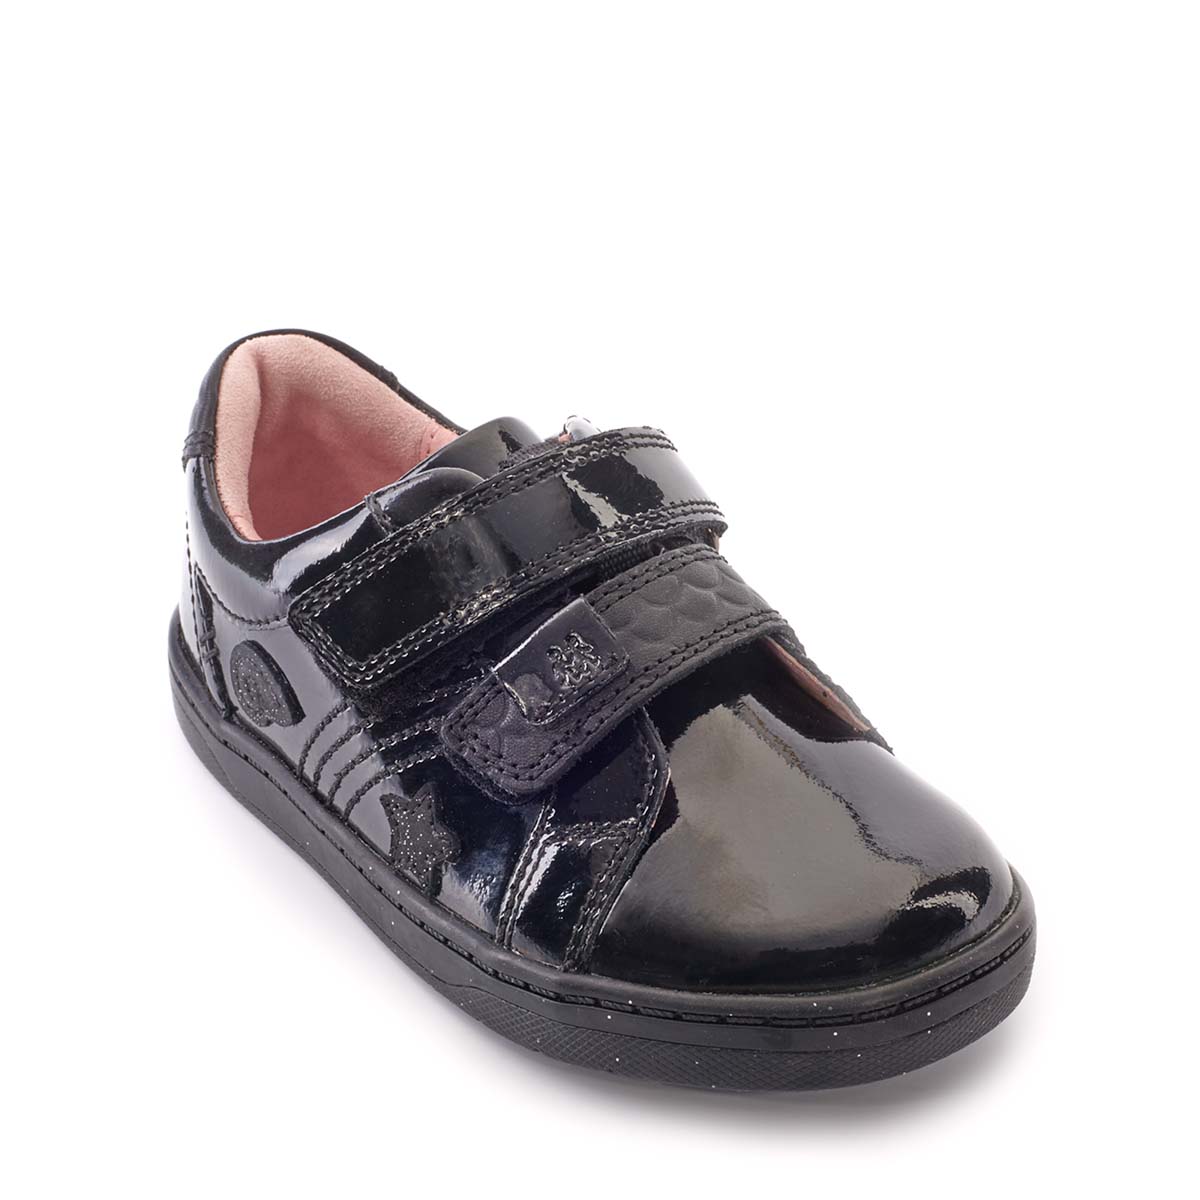 Start Rite - Fantasy In Black Patent 1741-36F In Size 11 In Plain Black Patent For School Girls Shoes  In Black Patent For kids